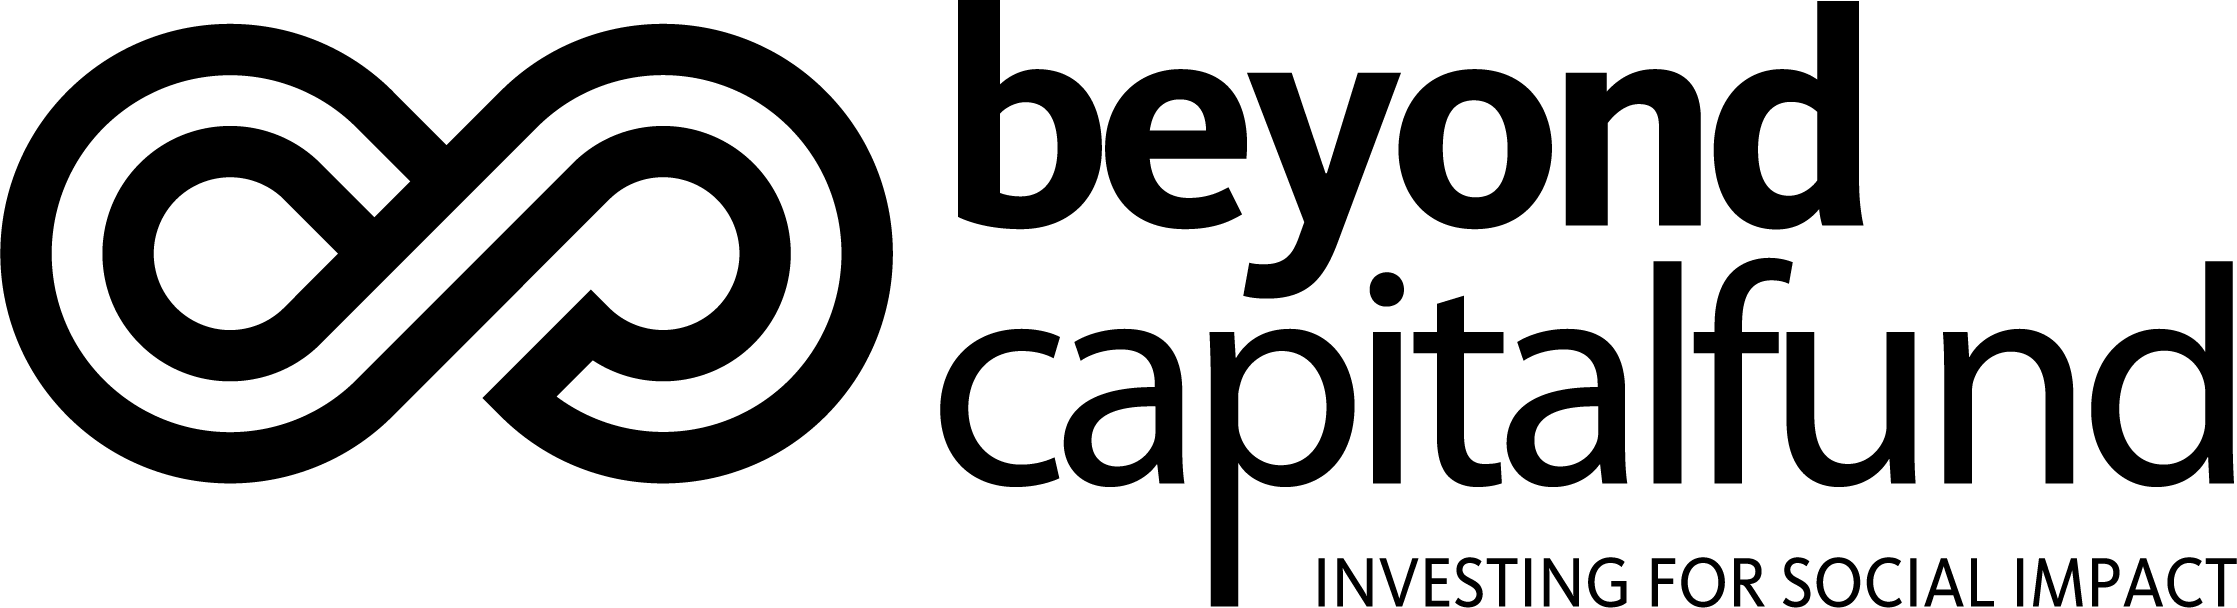 Beyond Capital Fund logo